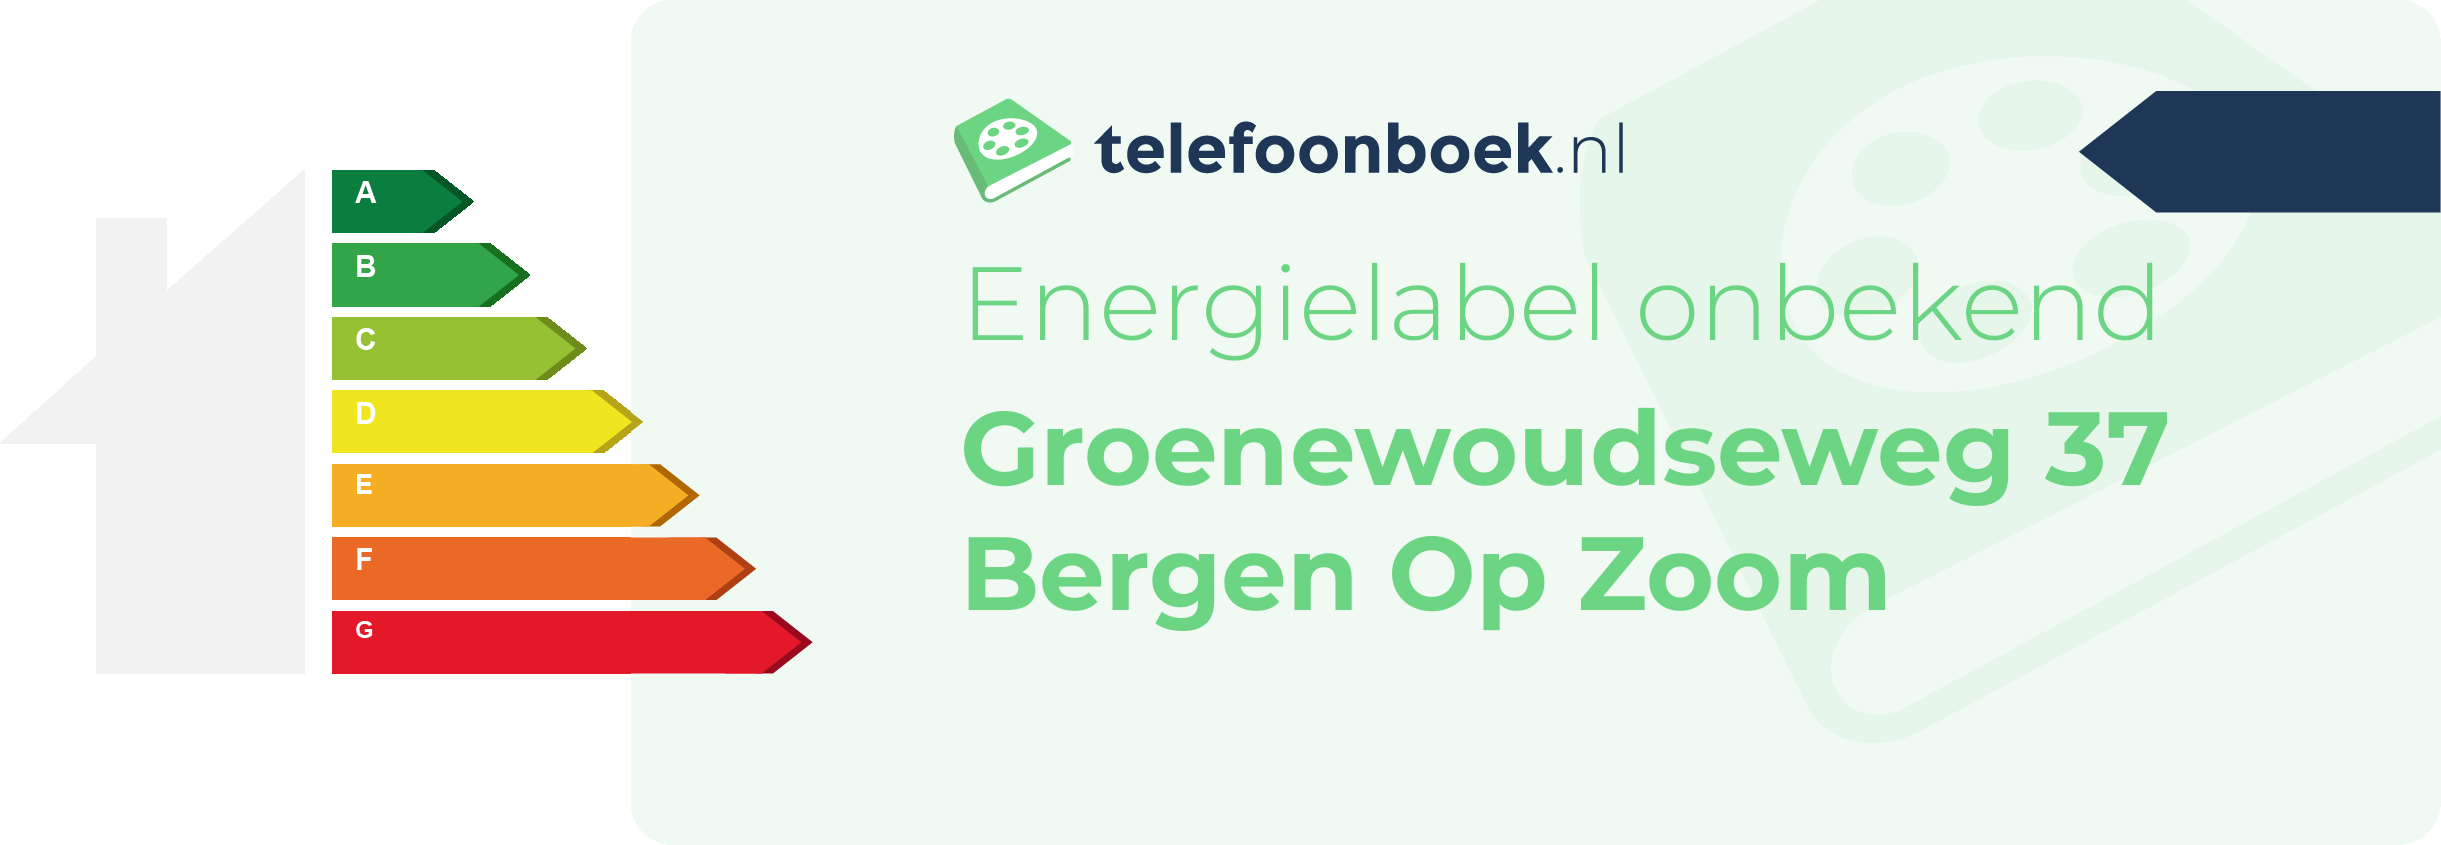 Energielabel Groenewoudseweg 37 Bergen Op Zoom